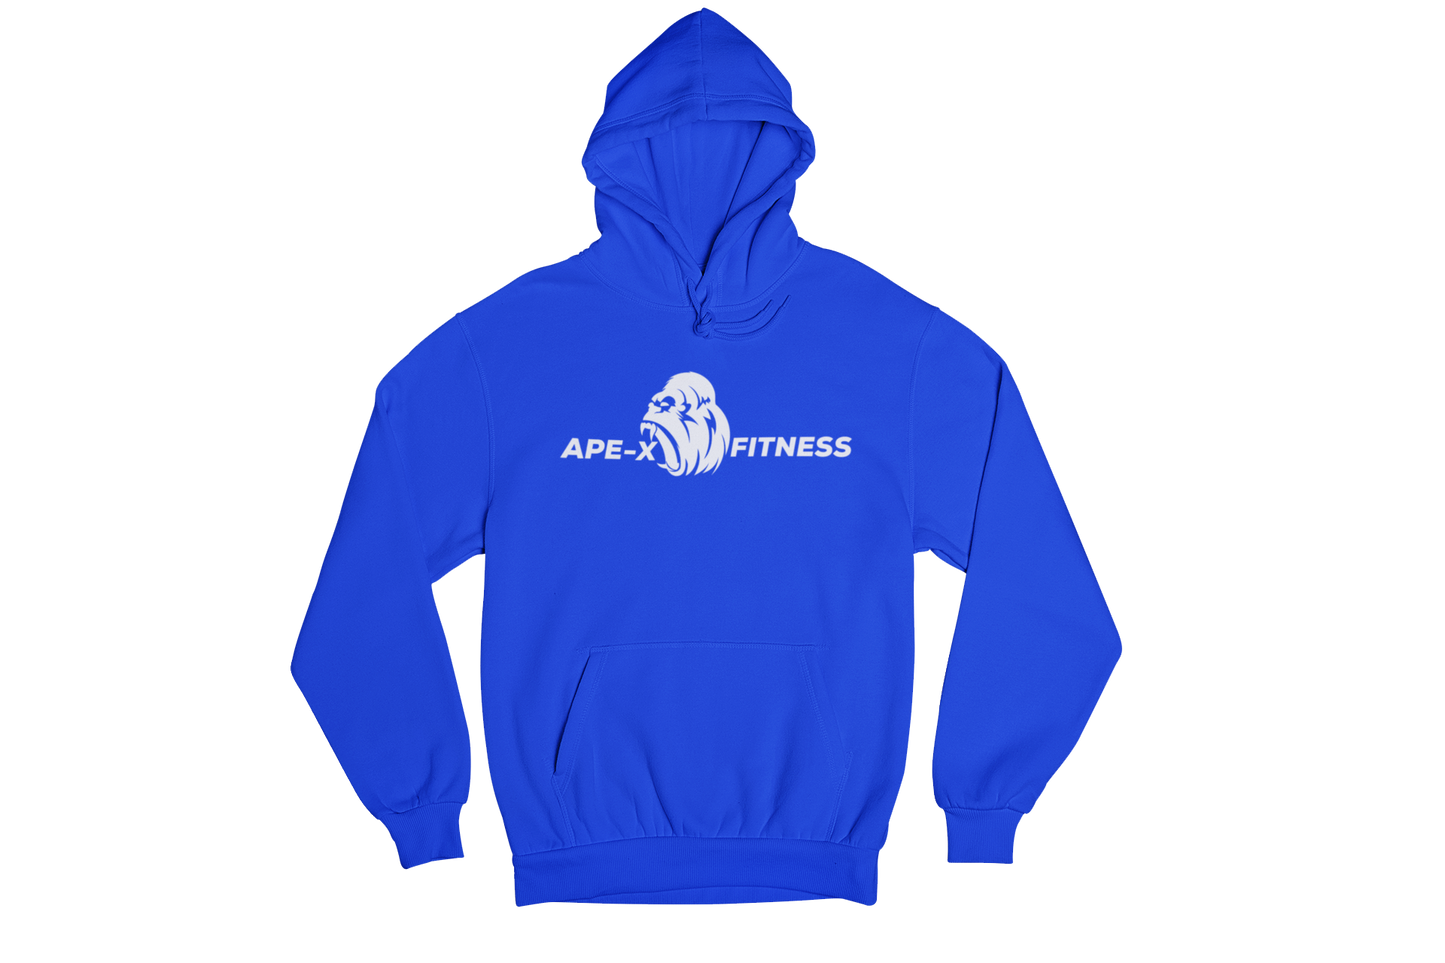 "Ape-X Fitness" Hoodie "BLUE"